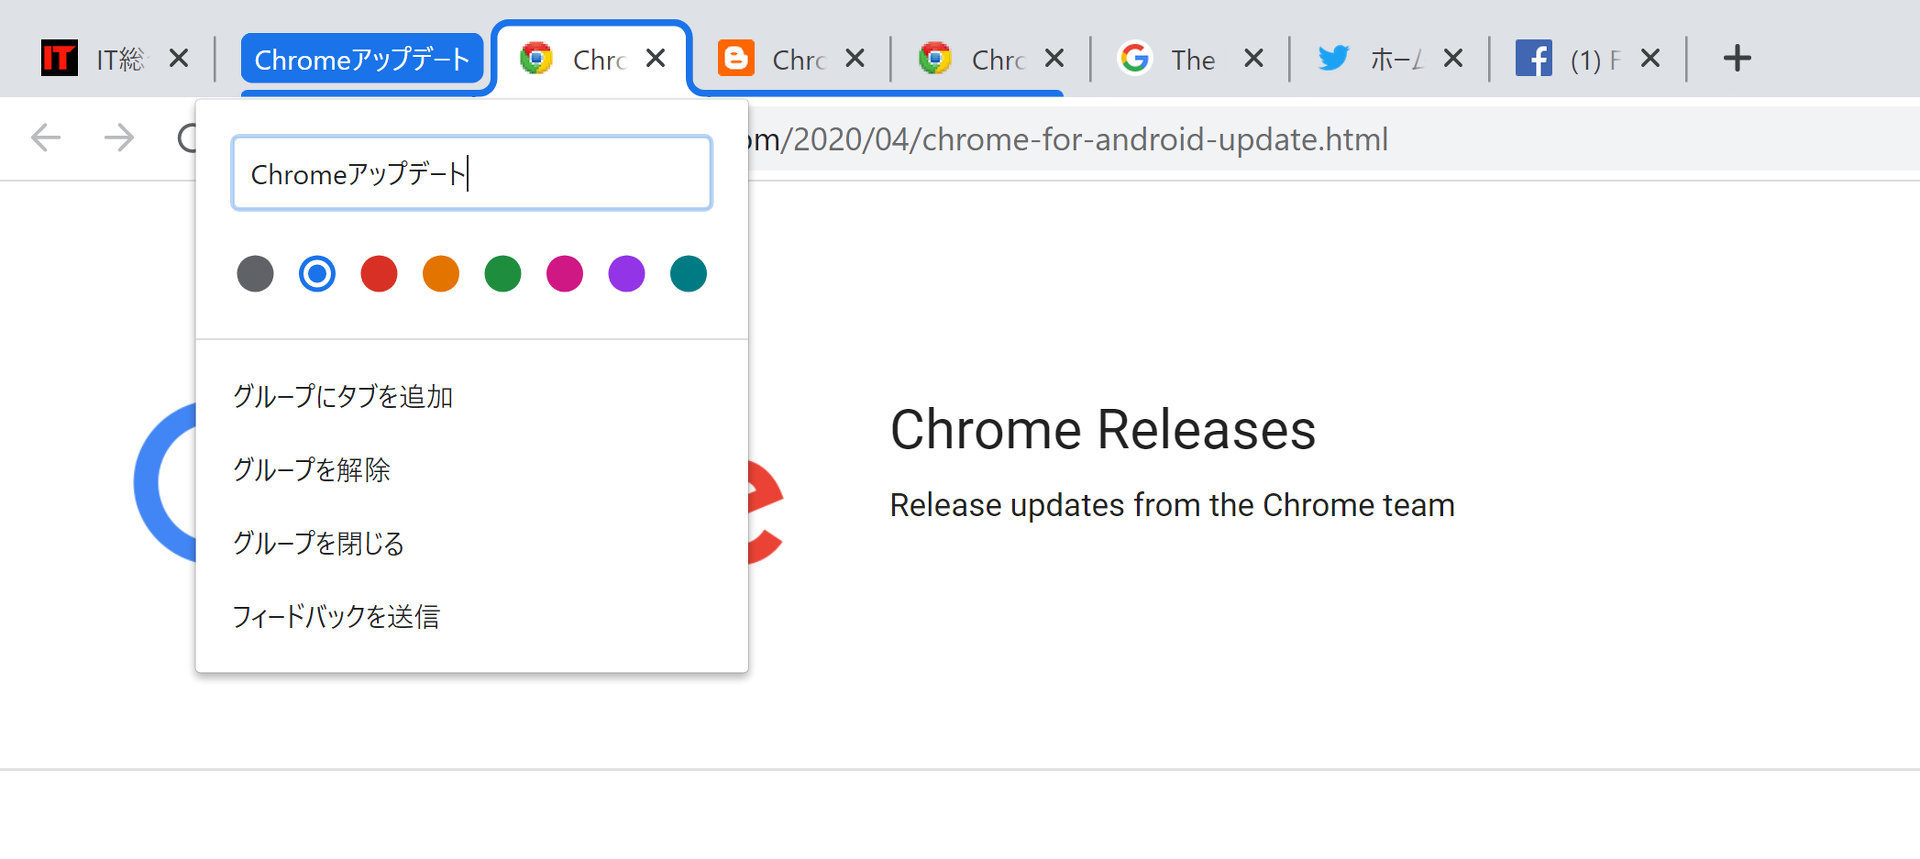 Chrome の安定版公開 タブのグループ化 Cookie設定や安全性チェック 拡張機能管理の改善など Itmedia News